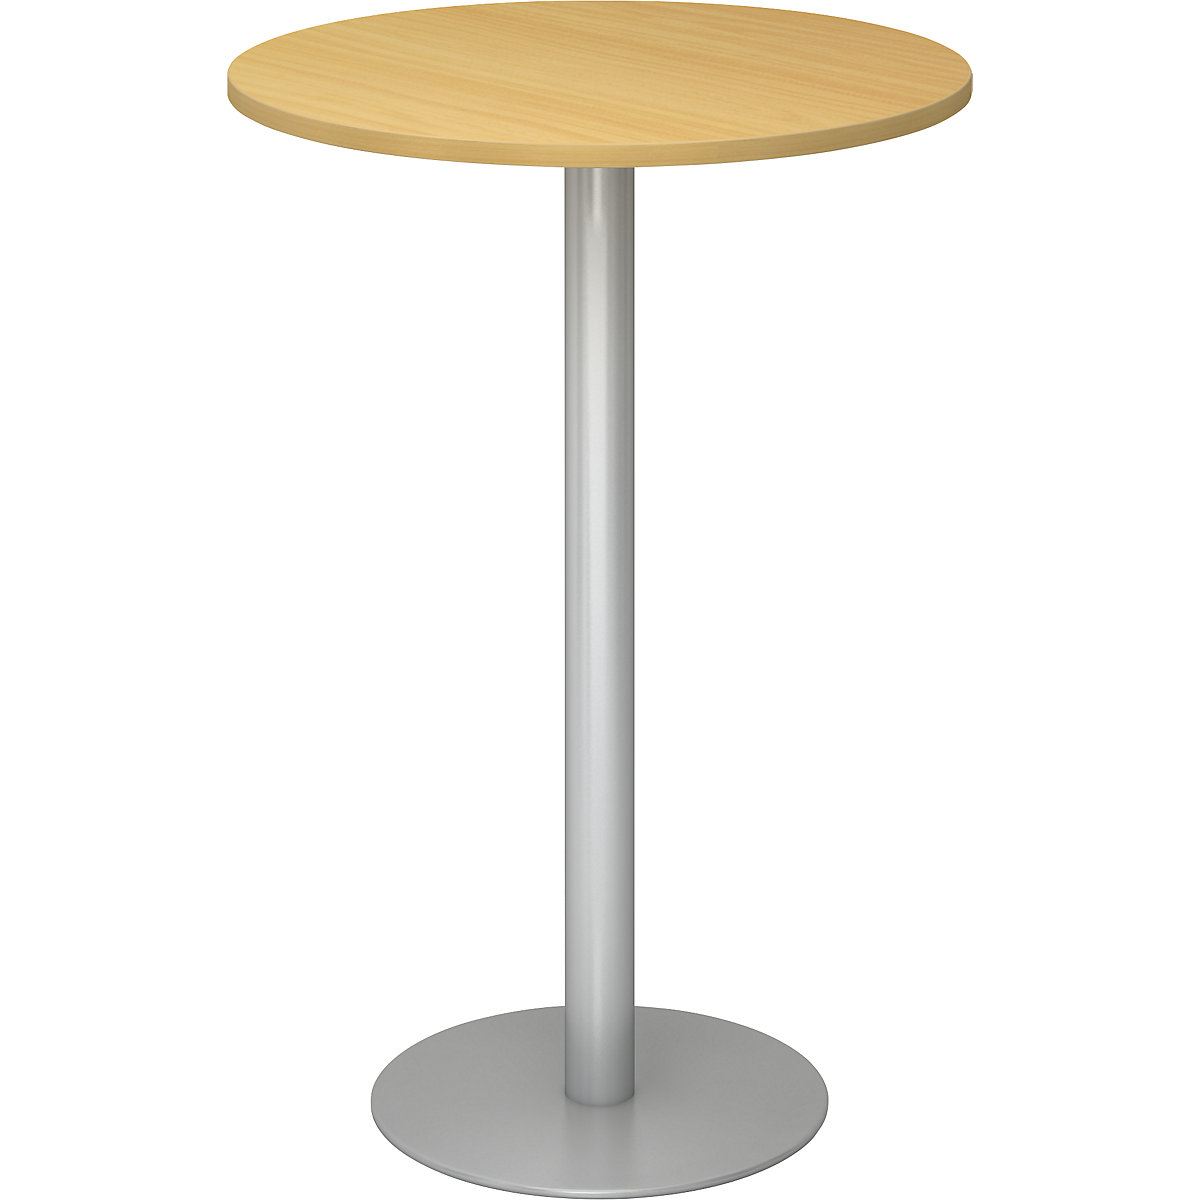 Barový stůl, Ø 800 mm, výška 1116 mm, stříbrný podstavec, deska bukový dekor